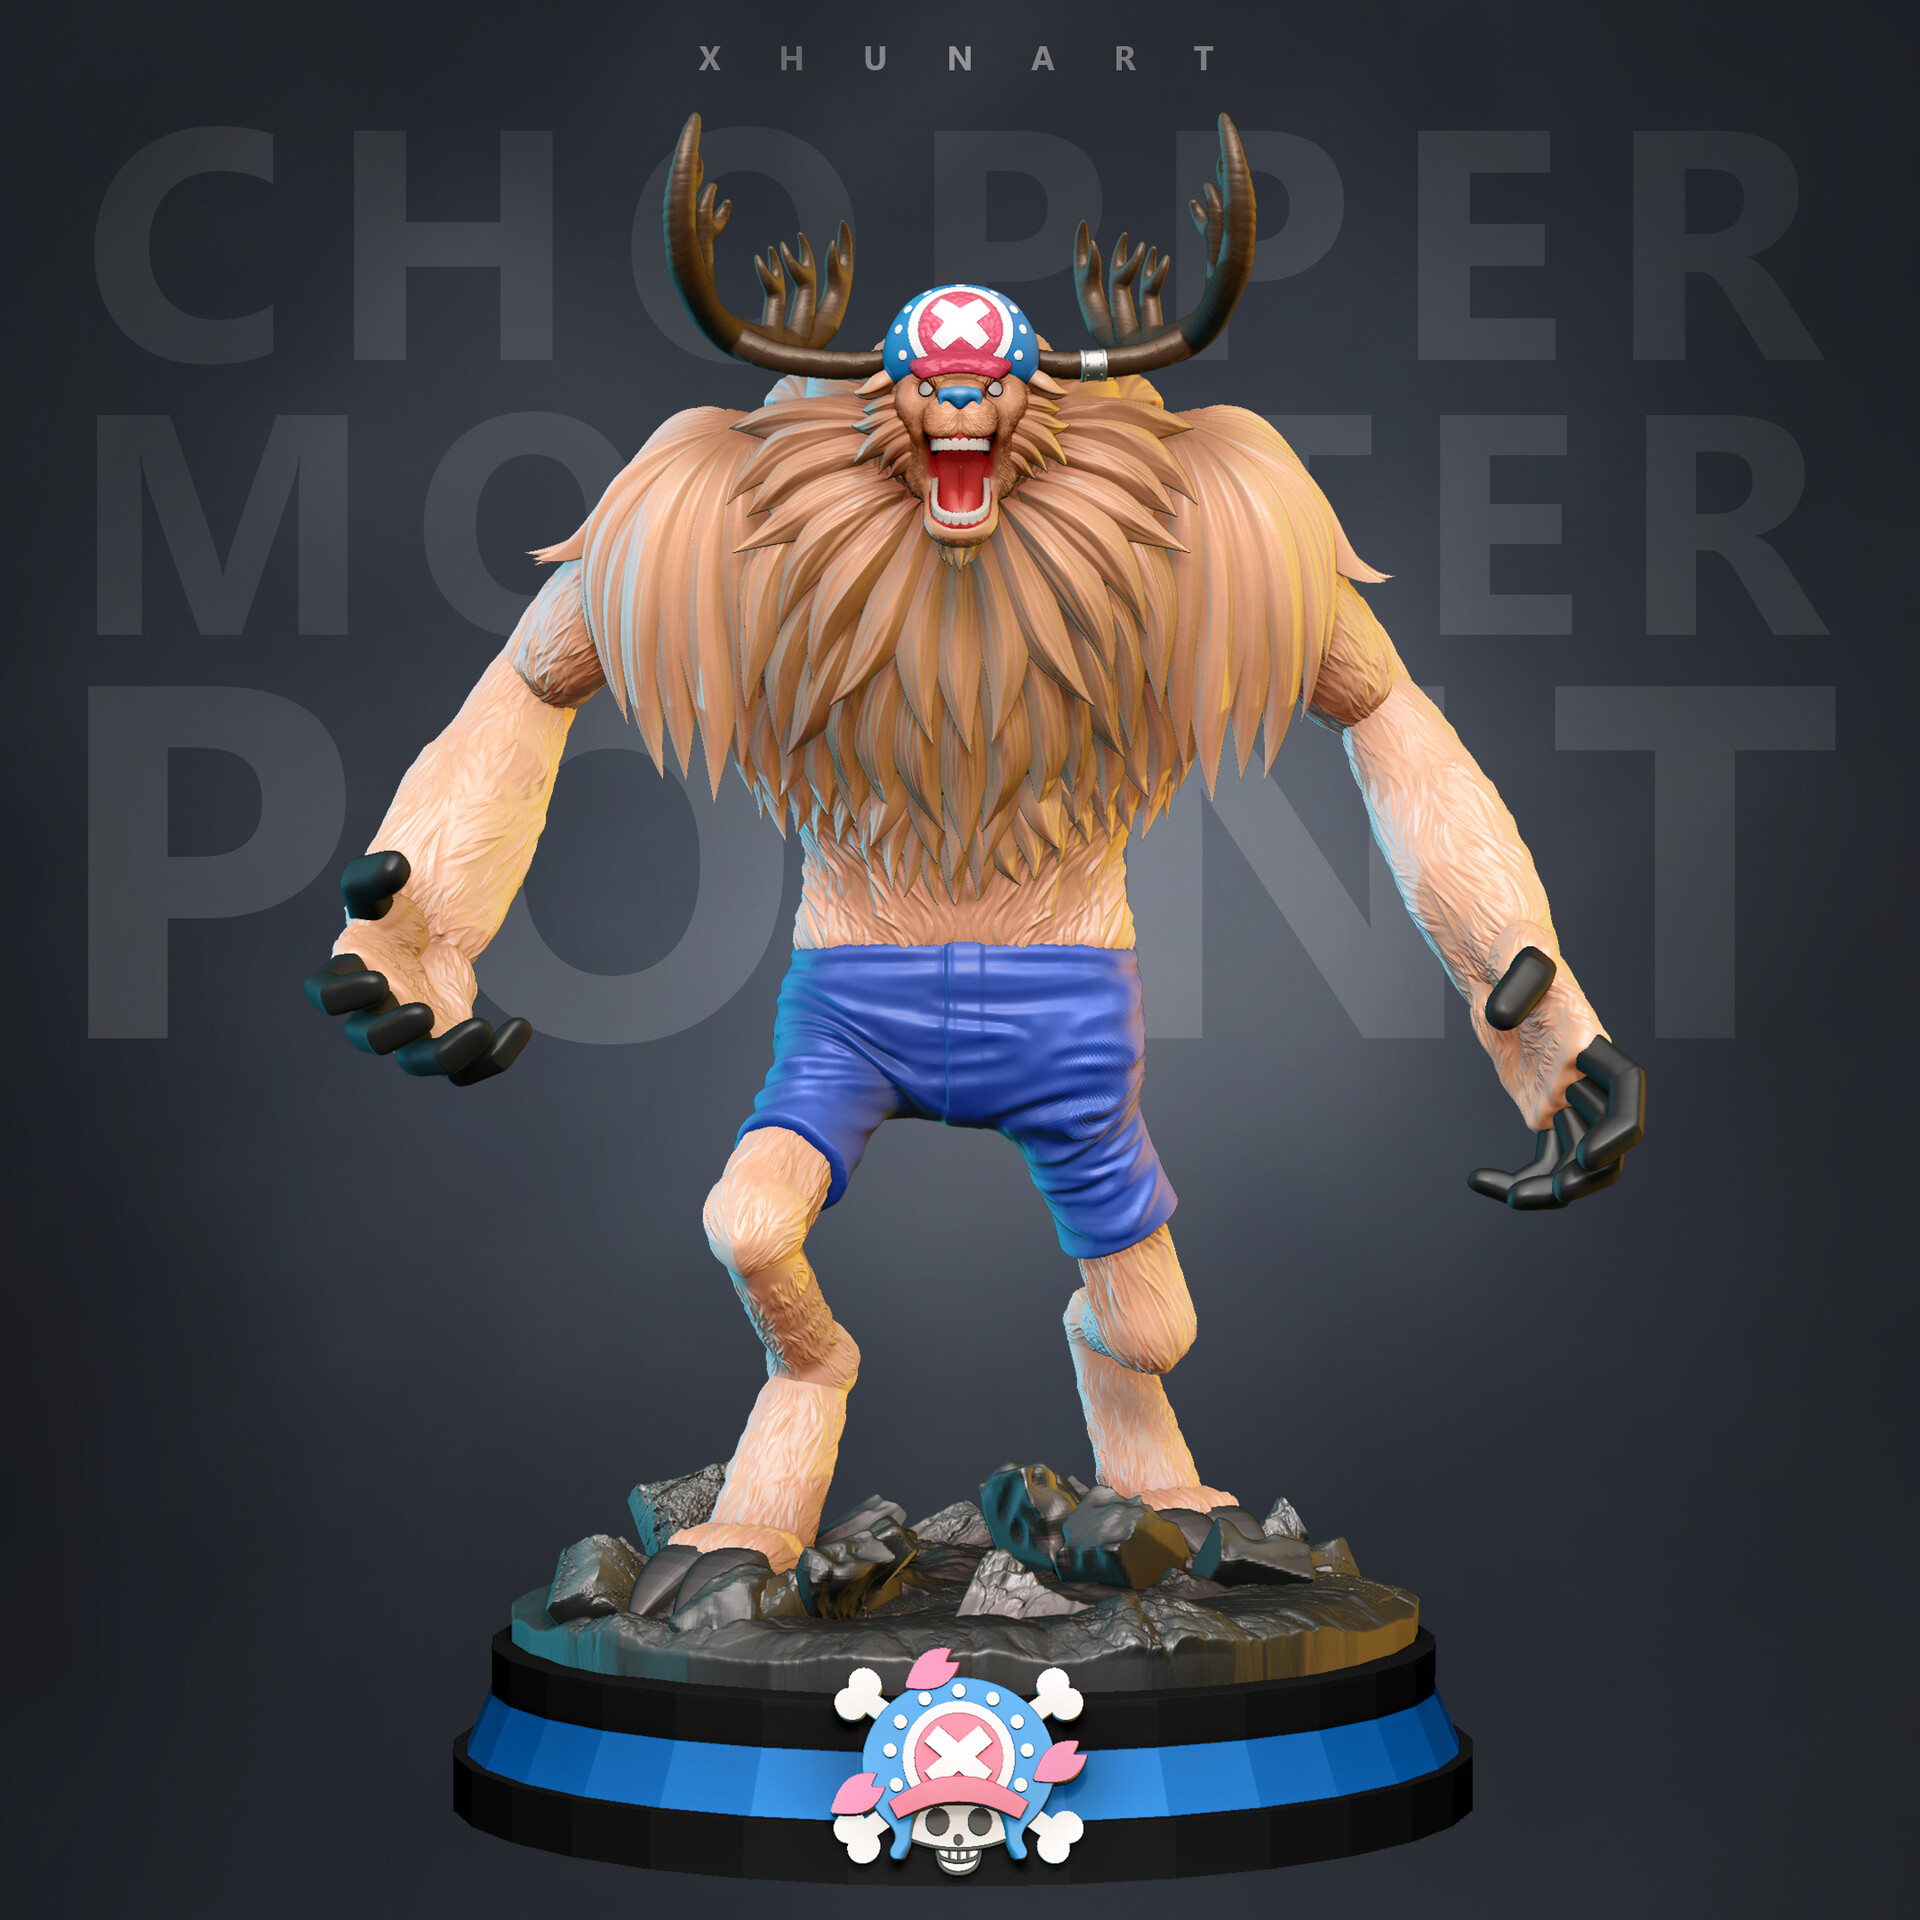 Monster Chopper - Monster Chopper updated their profile